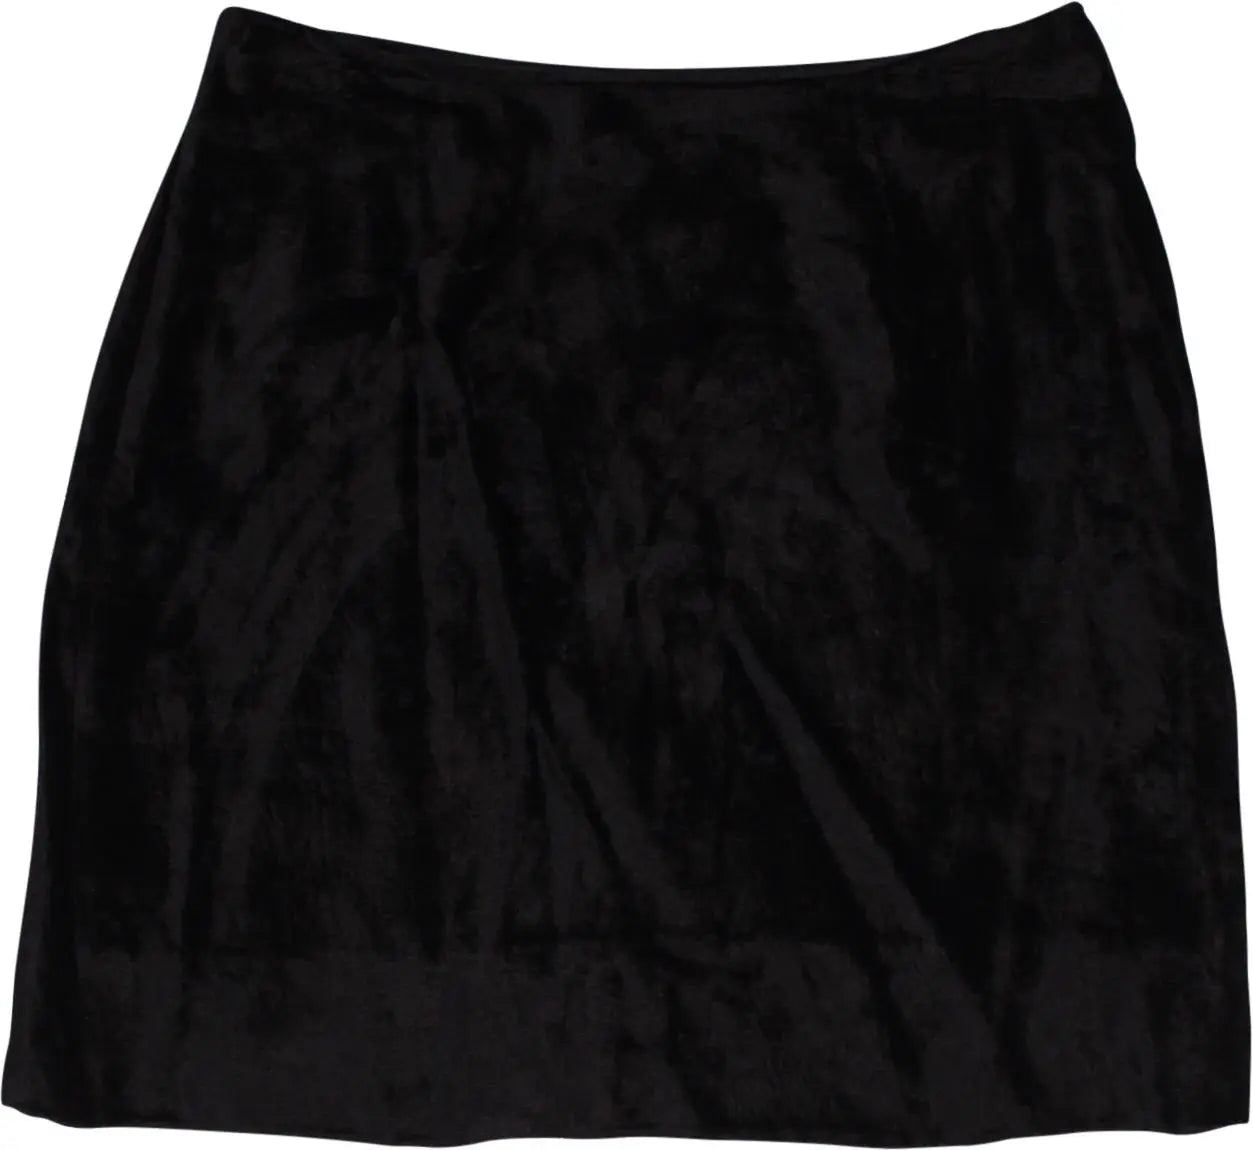 Pamela - Black Velvet Skirt- ThriftTale.com - Vintage and second handclothing